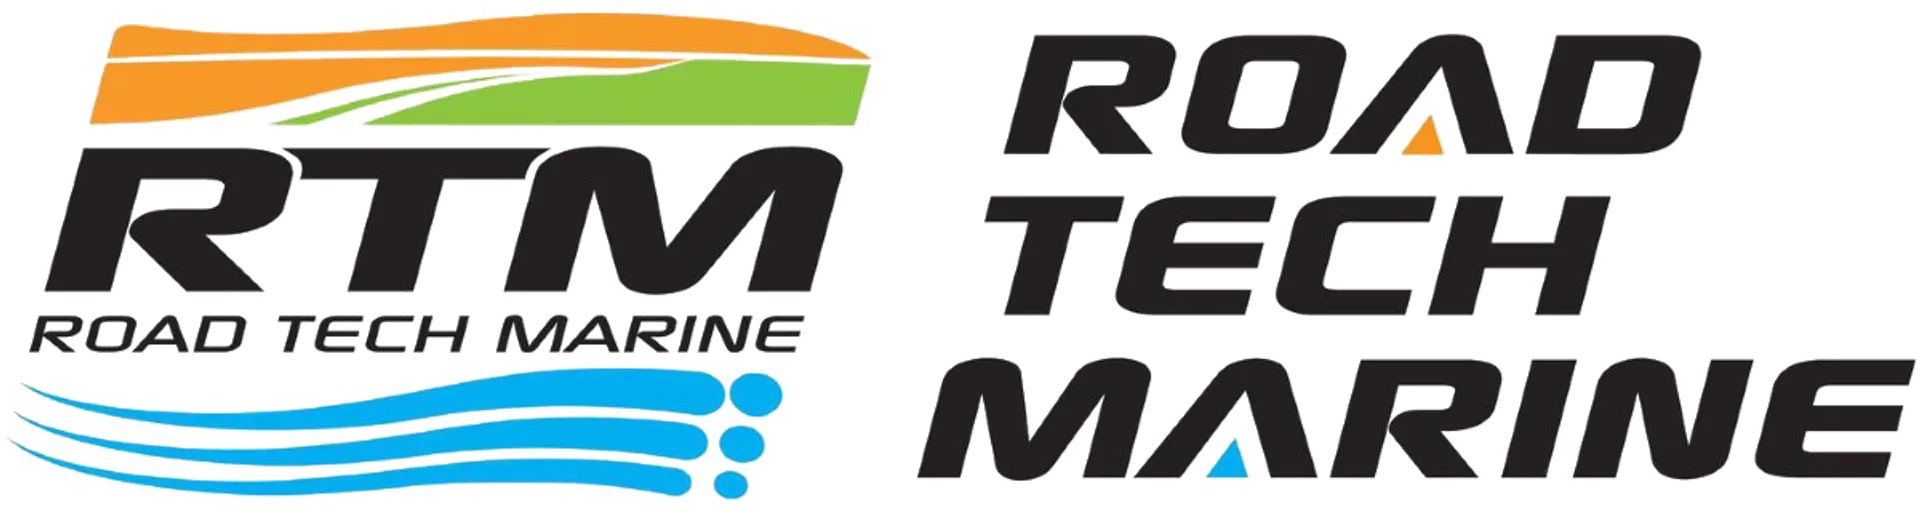 ROAD TECH MARINE logo of current catalogue